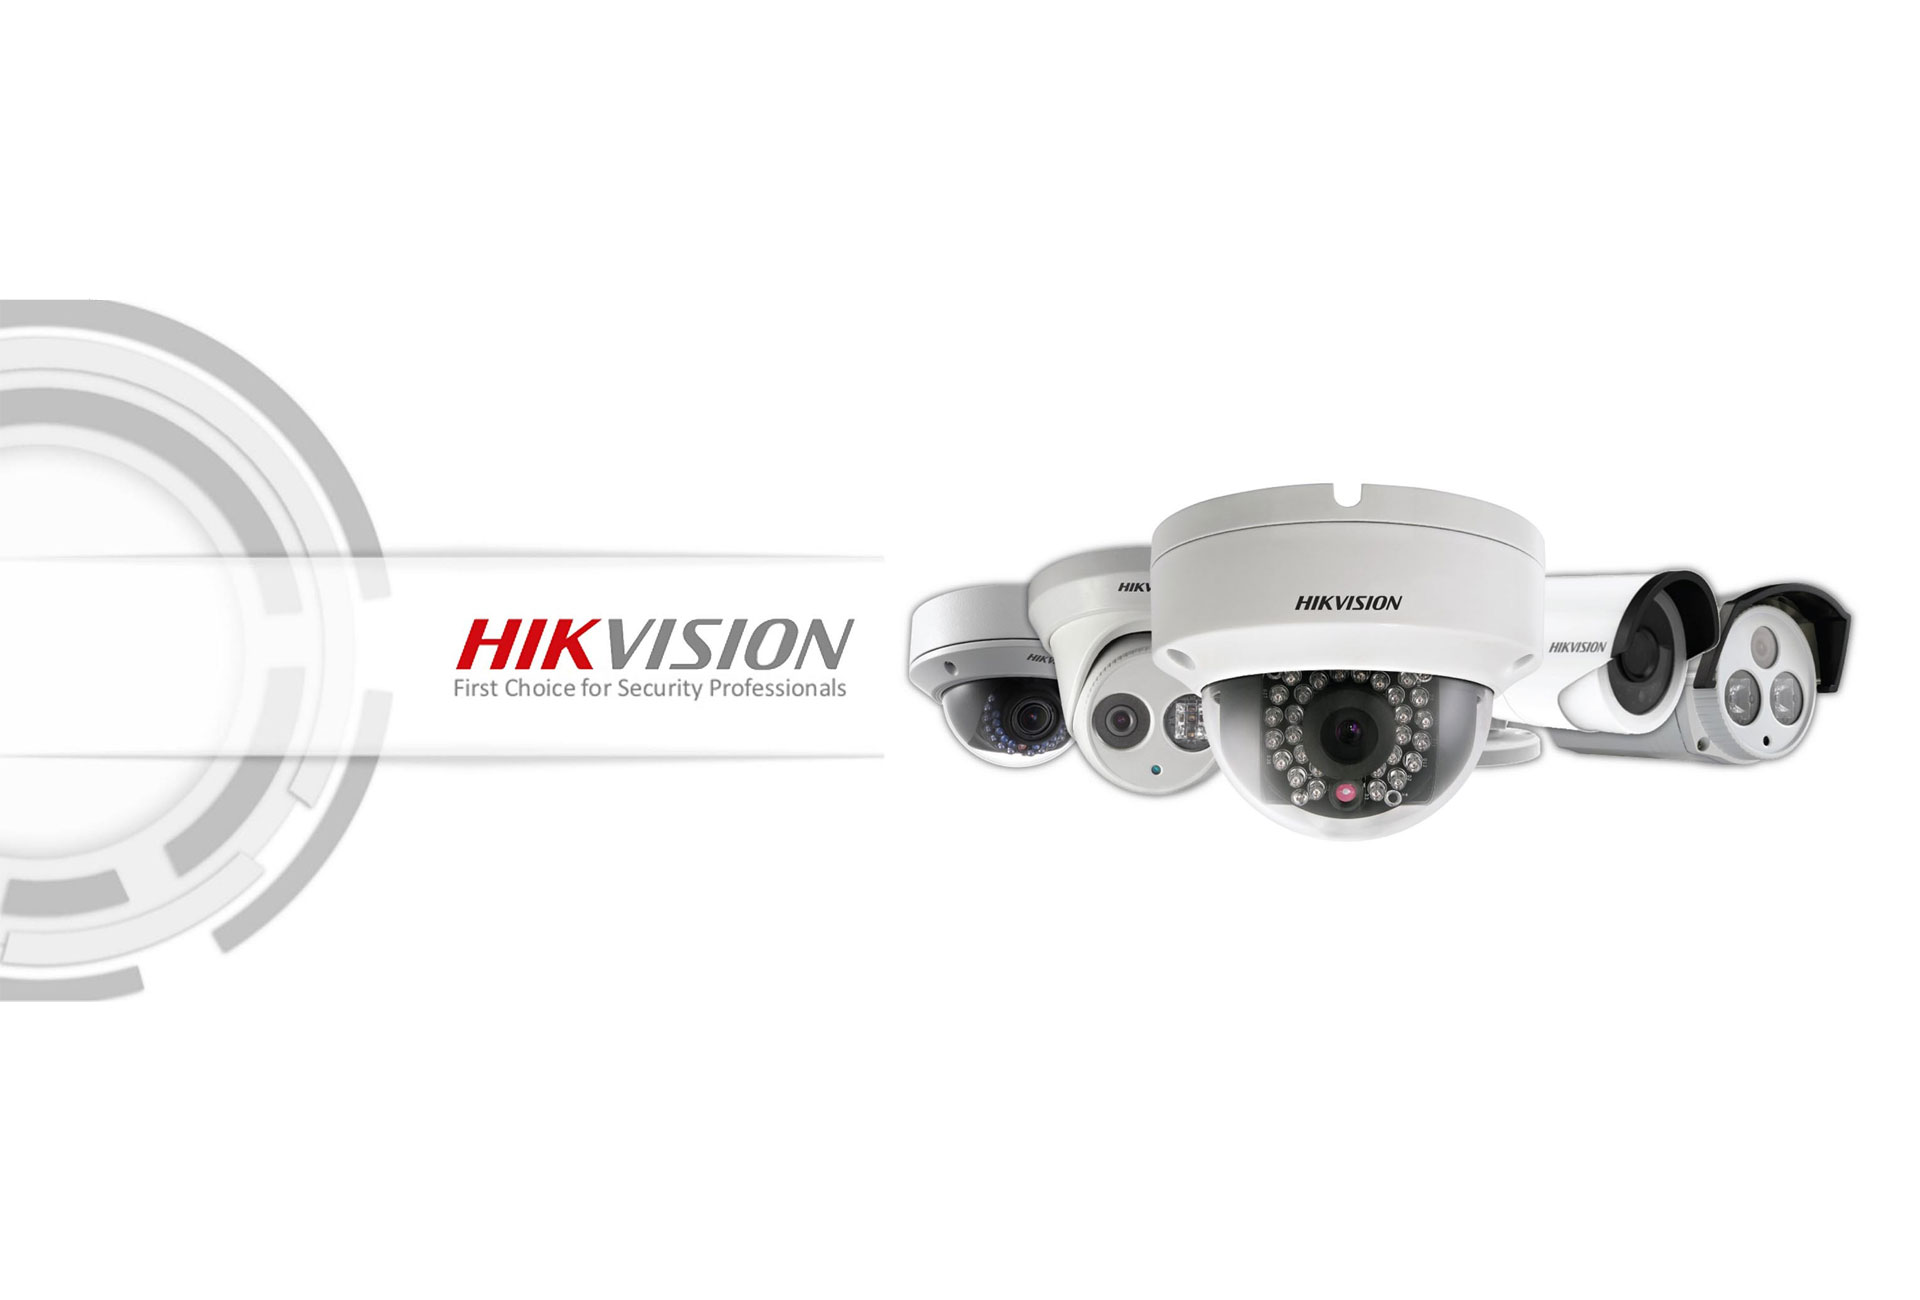 hikvision cctv camera suppliers in faridabad